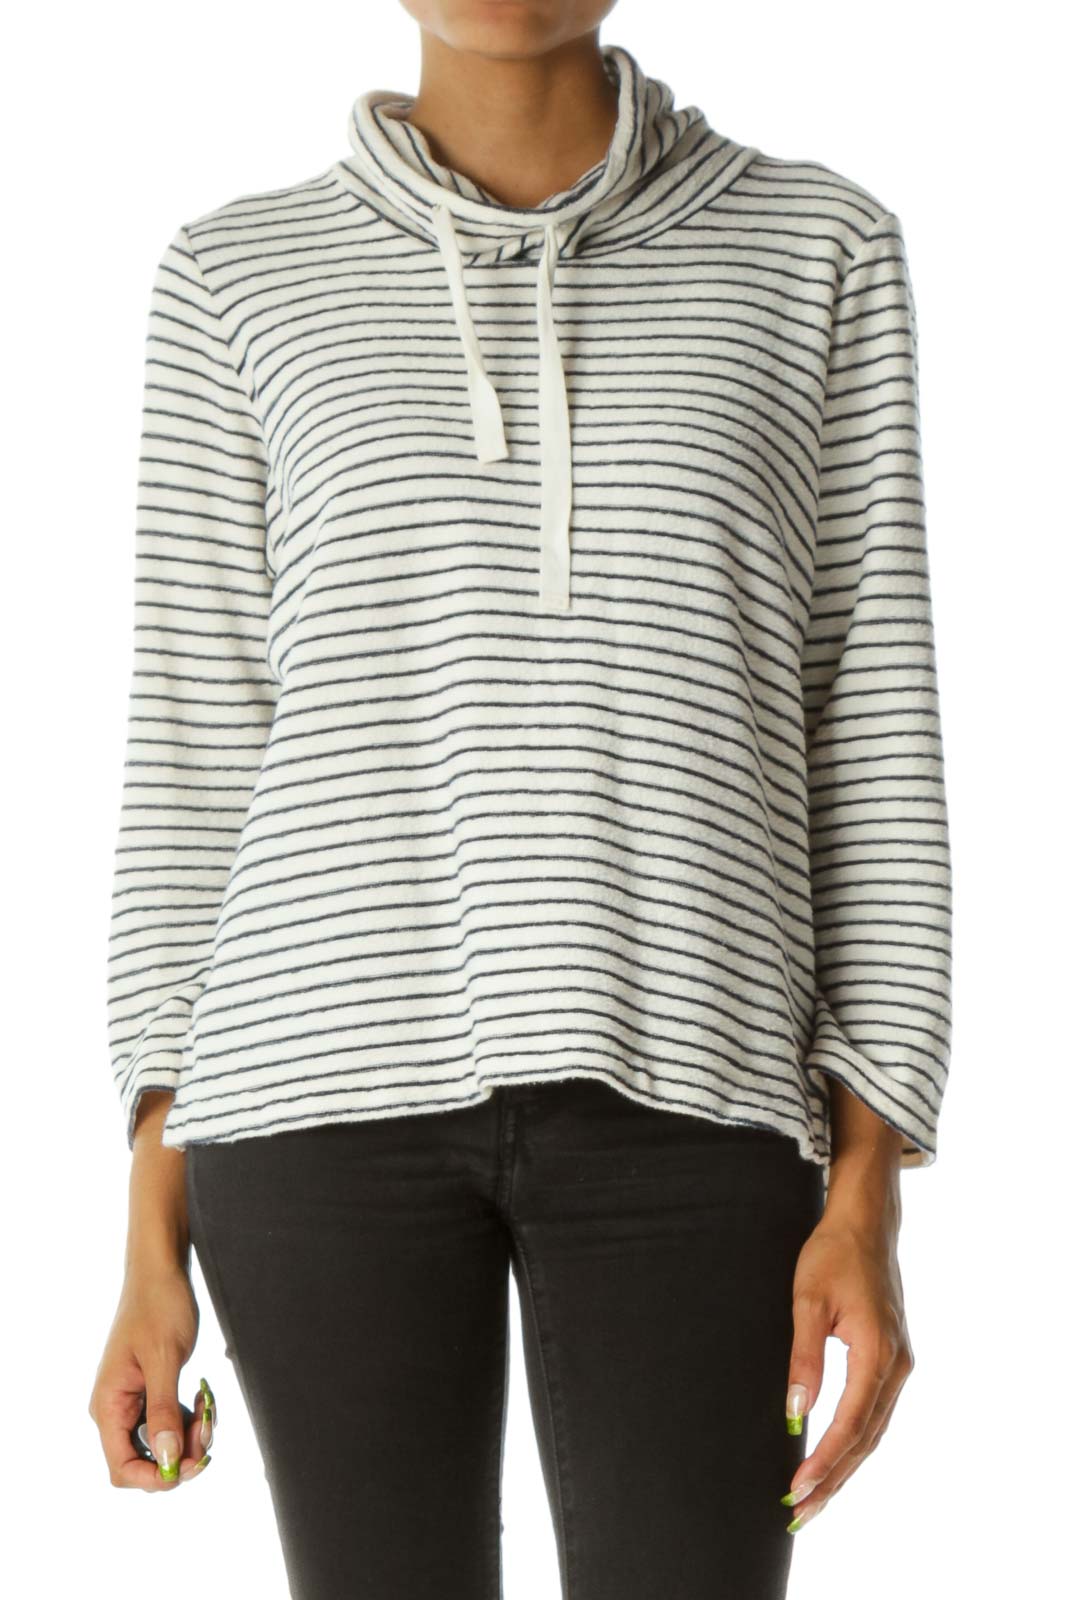 Black & White Stripe Mock Neck Sweater Front